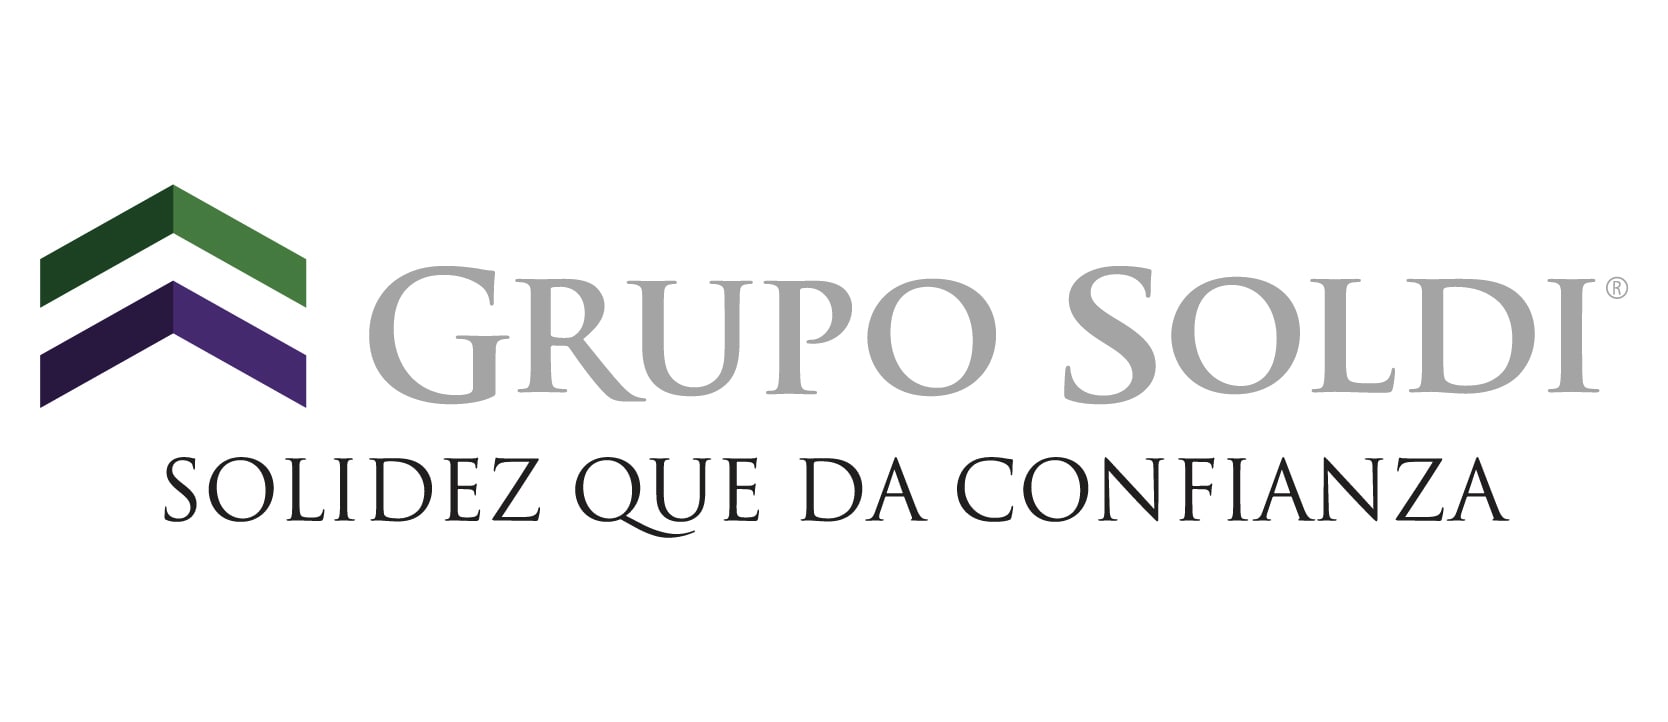 Logotipo Grupo Soldi